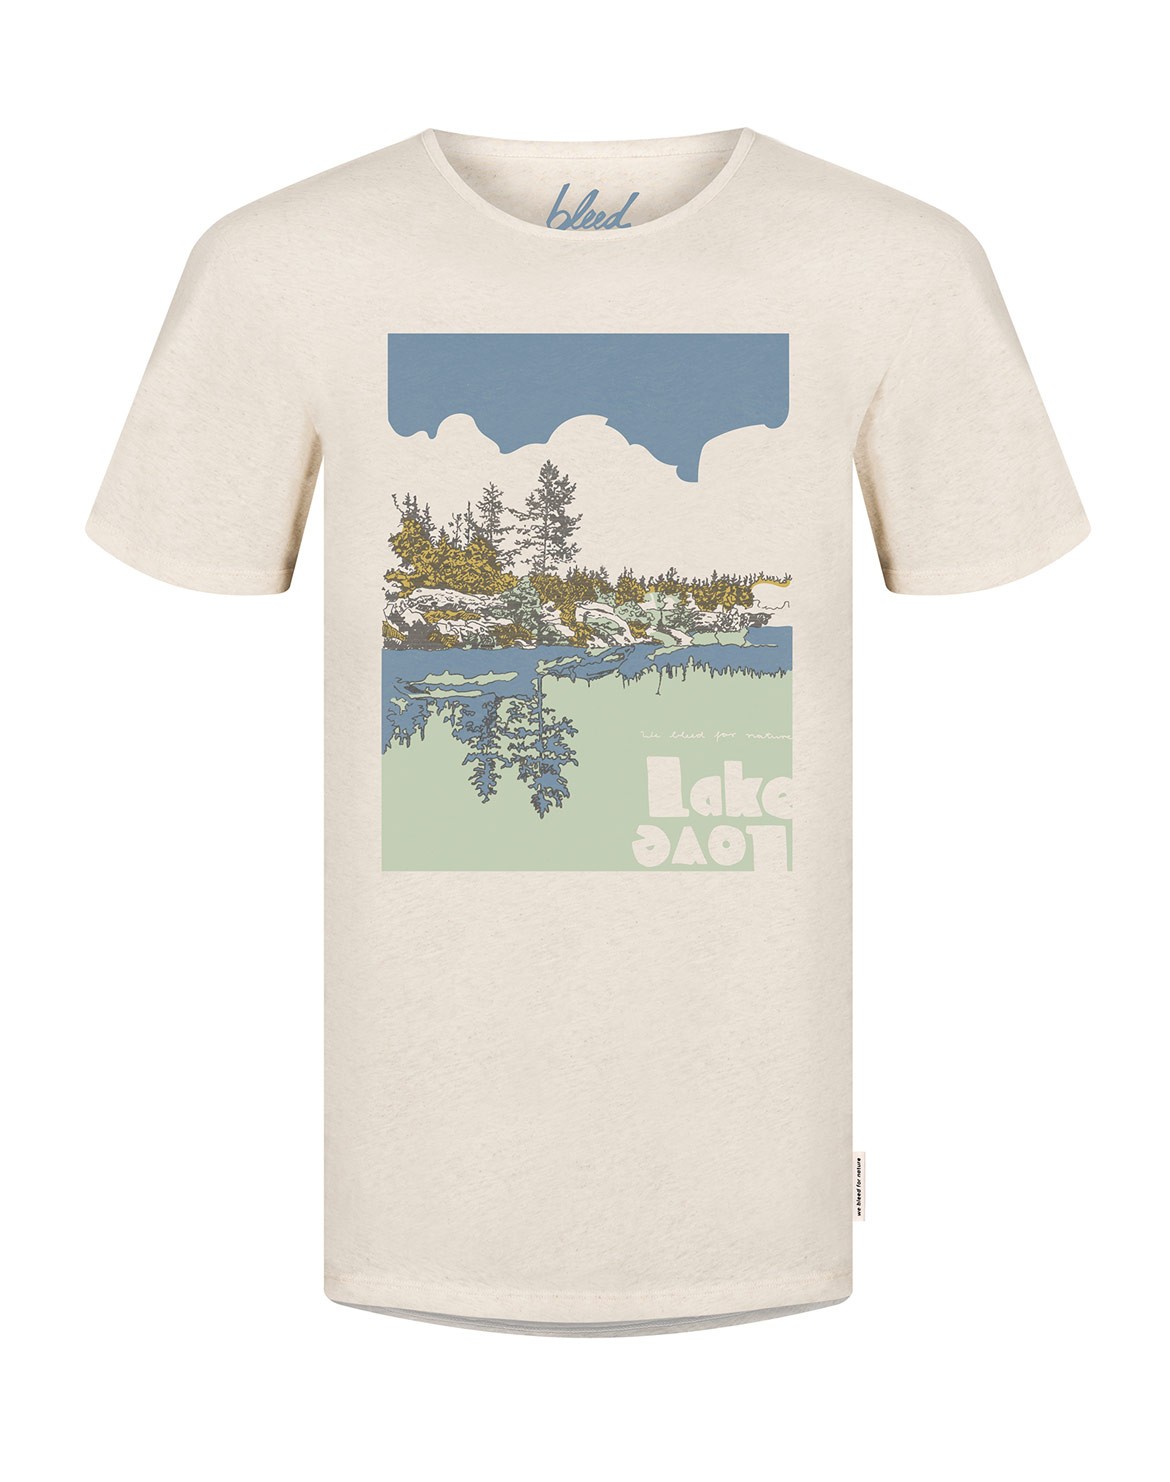 Lakelovers T-Shirt